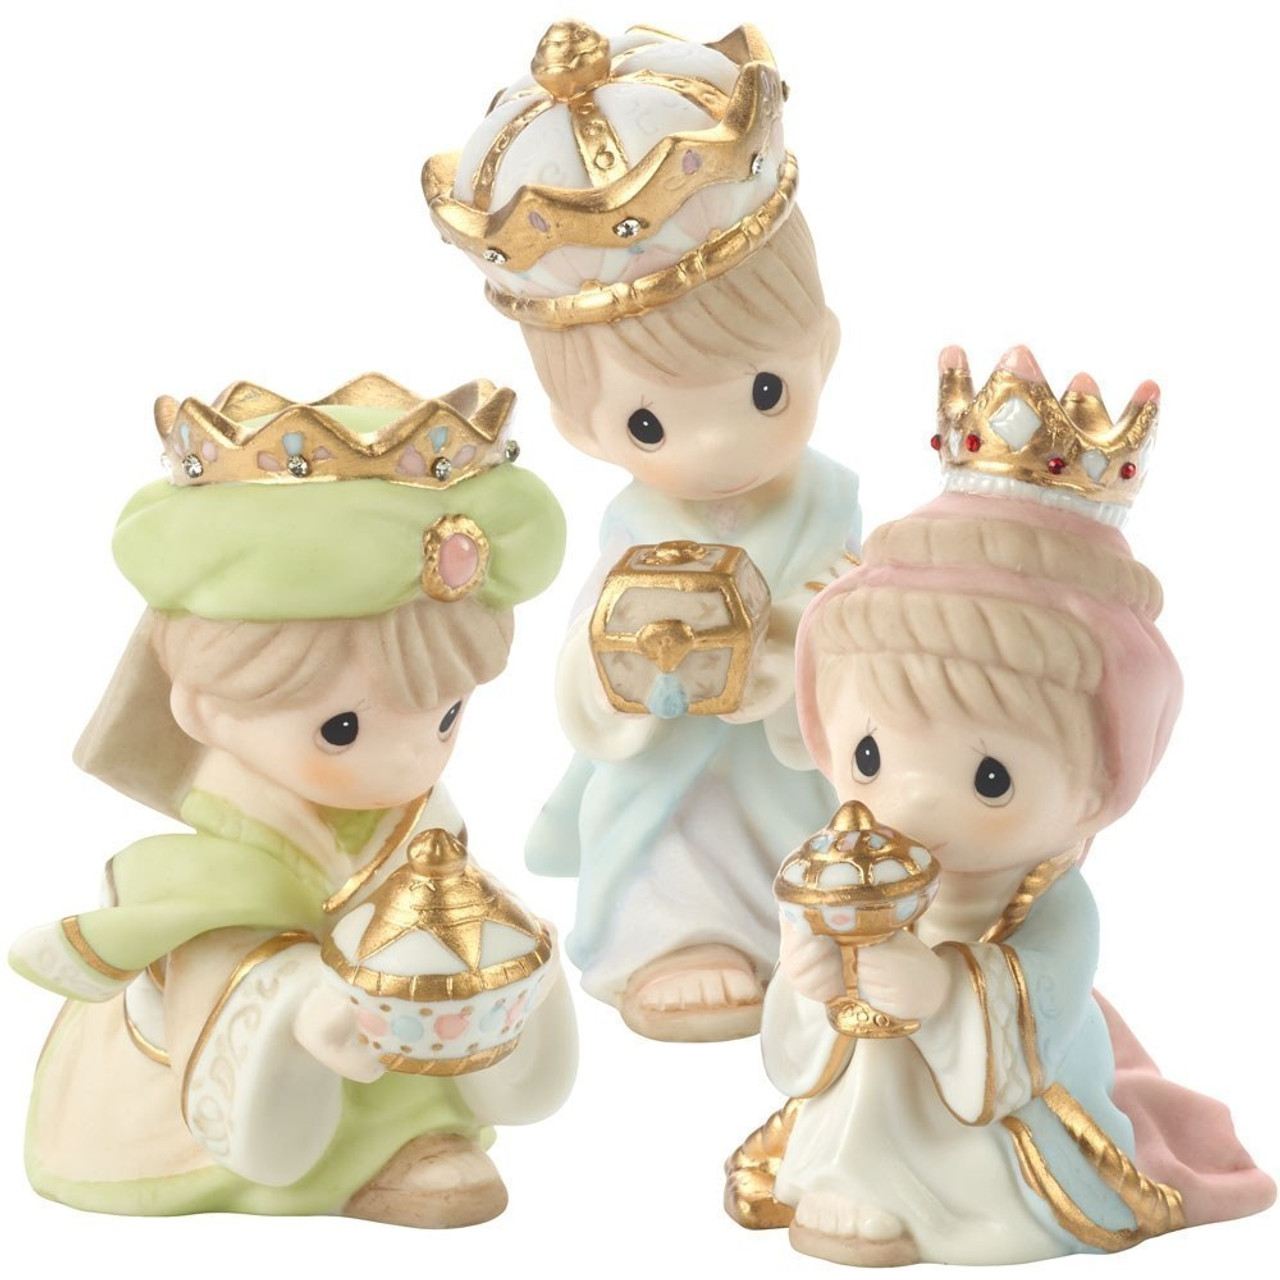 We Three Kings 3 Piece Nativity Set Bisque Porcelain Mini Figurines